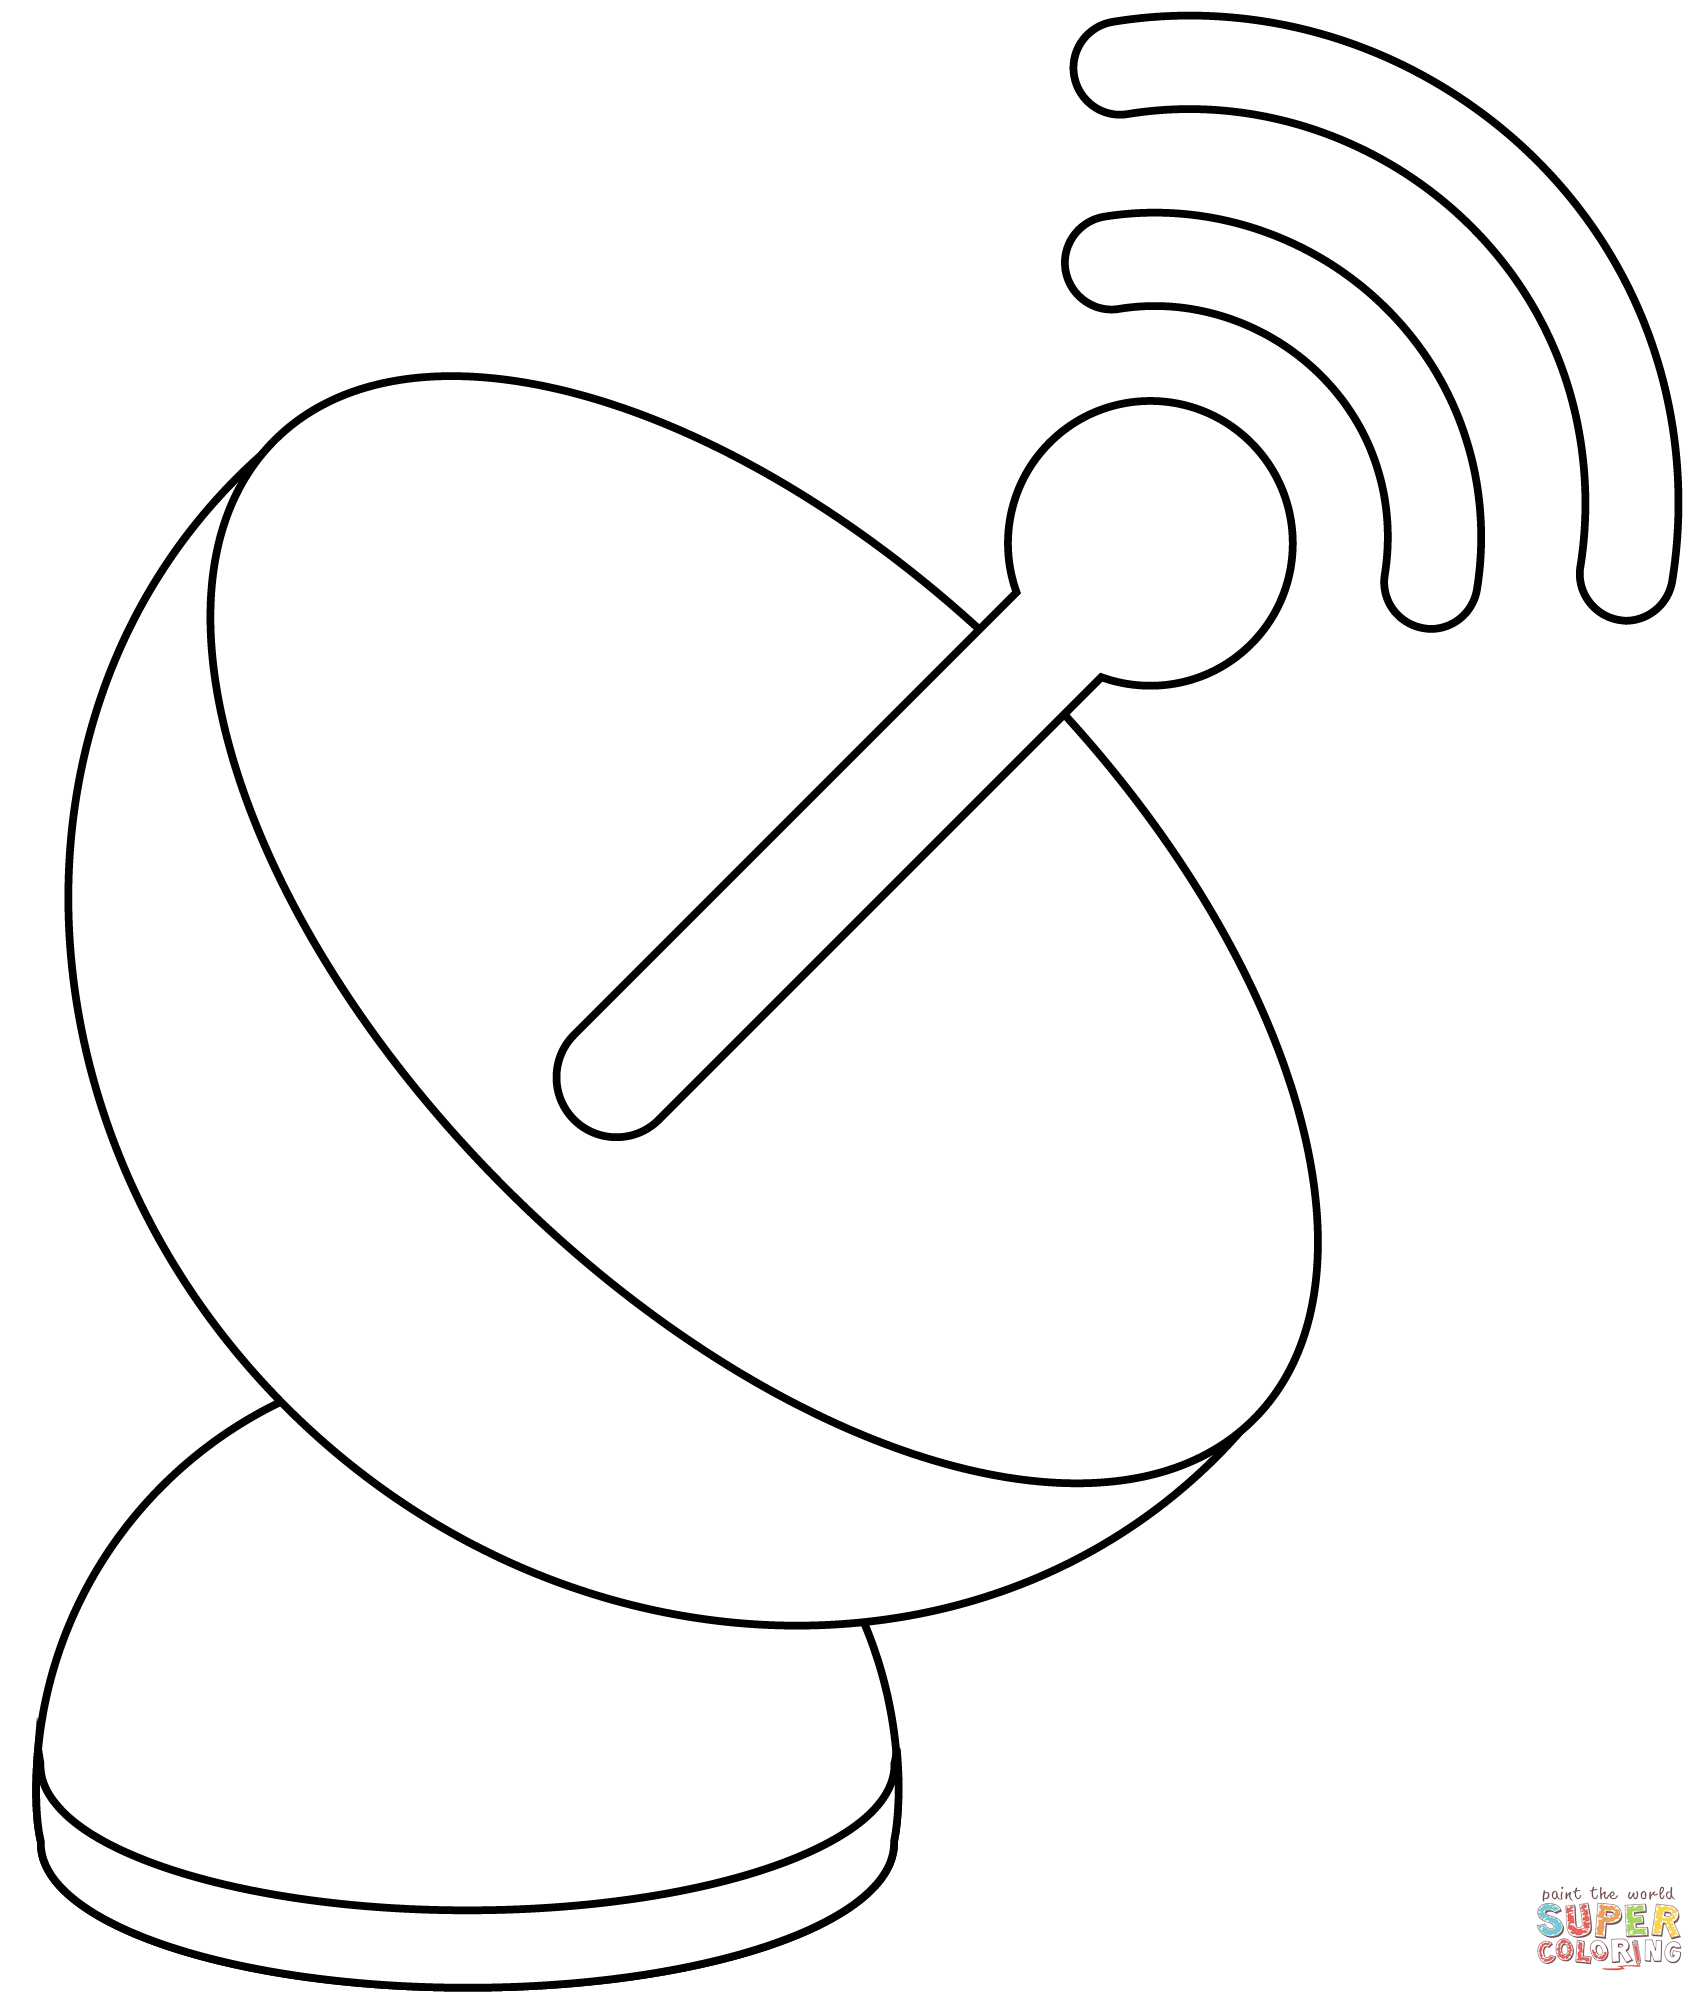 Satellite antenna emoji coloring page free printable coloring pages